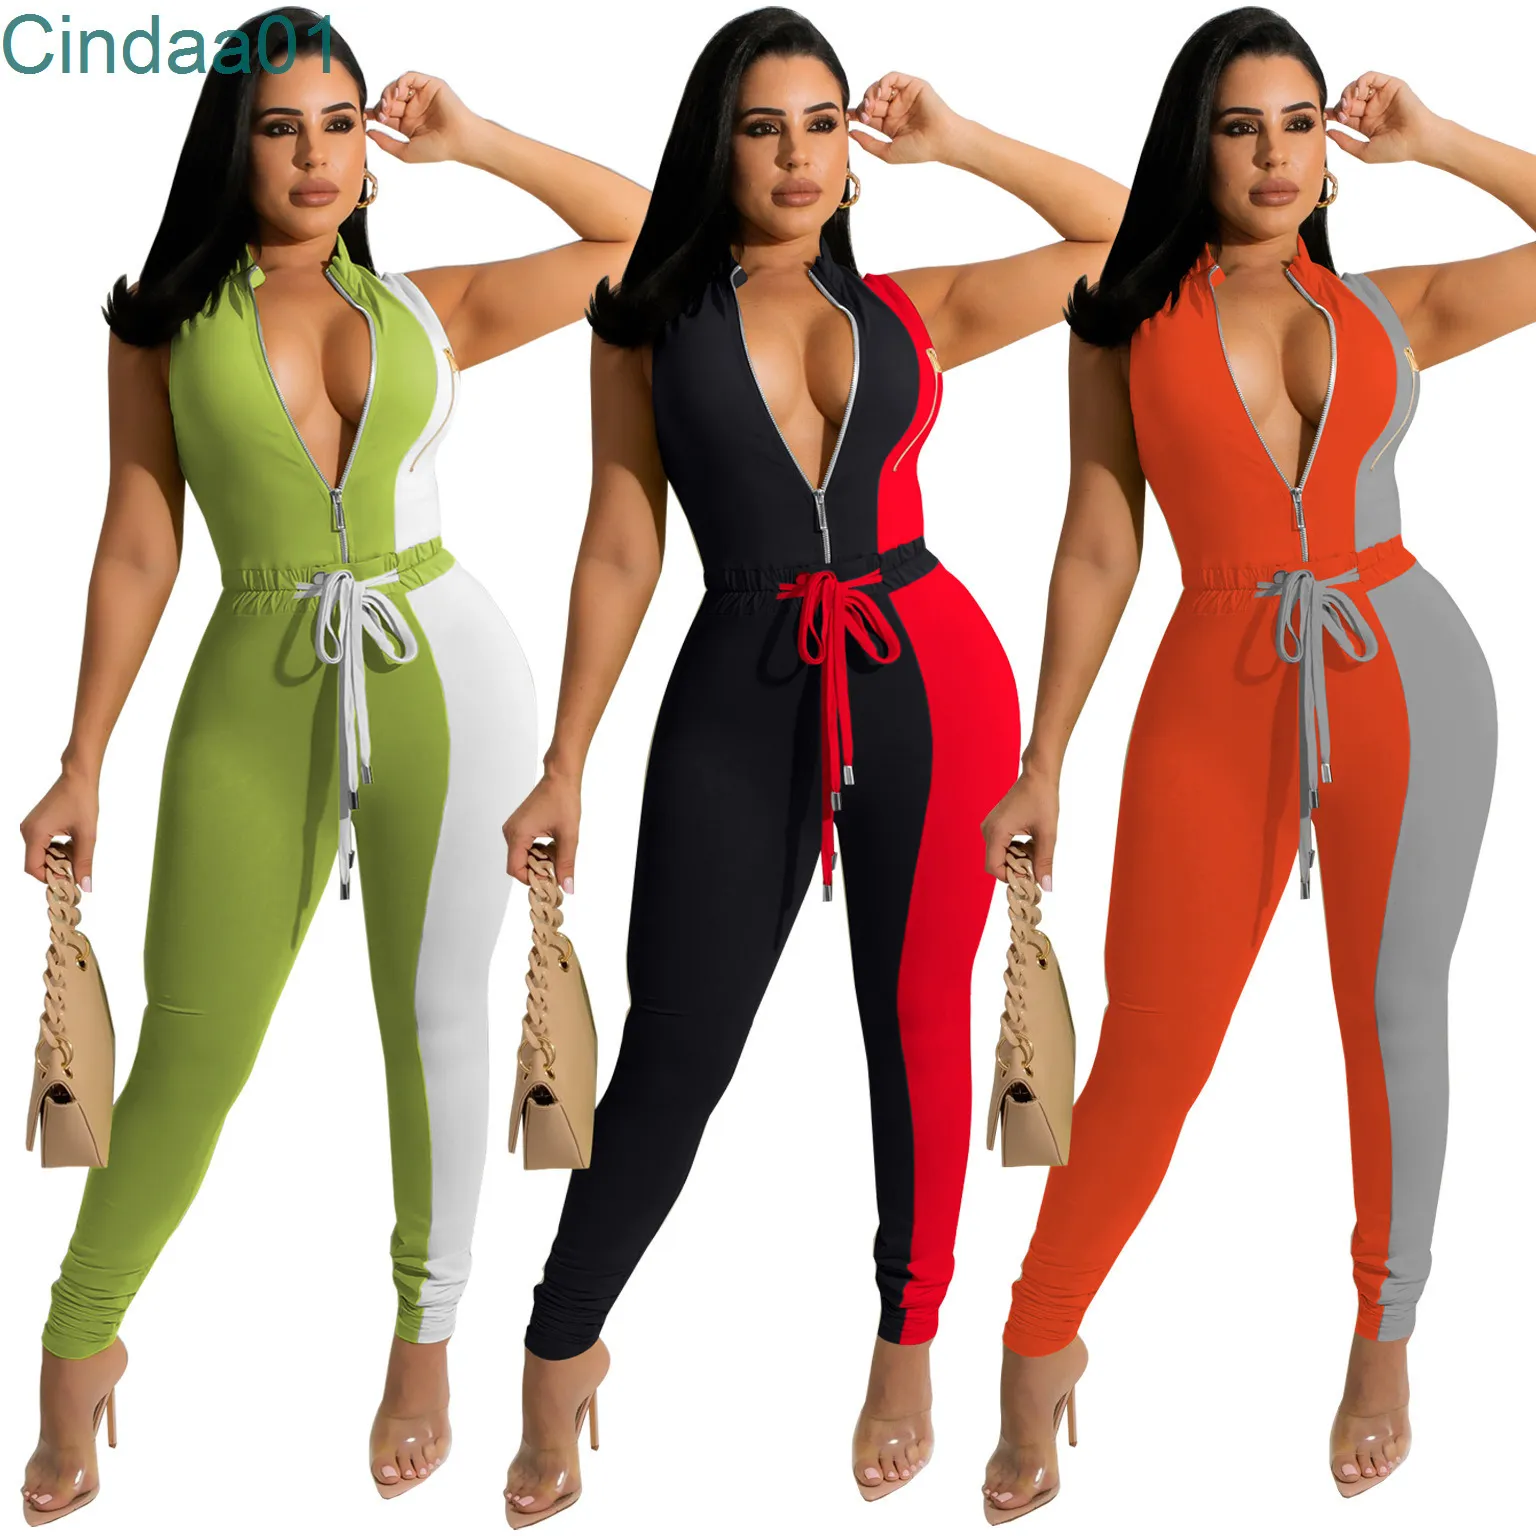 Frauen Enge Hosen Sexy V-ausschnitt Farbe Passenden Mode Lässig Overall Kordelzug strampler S-XL